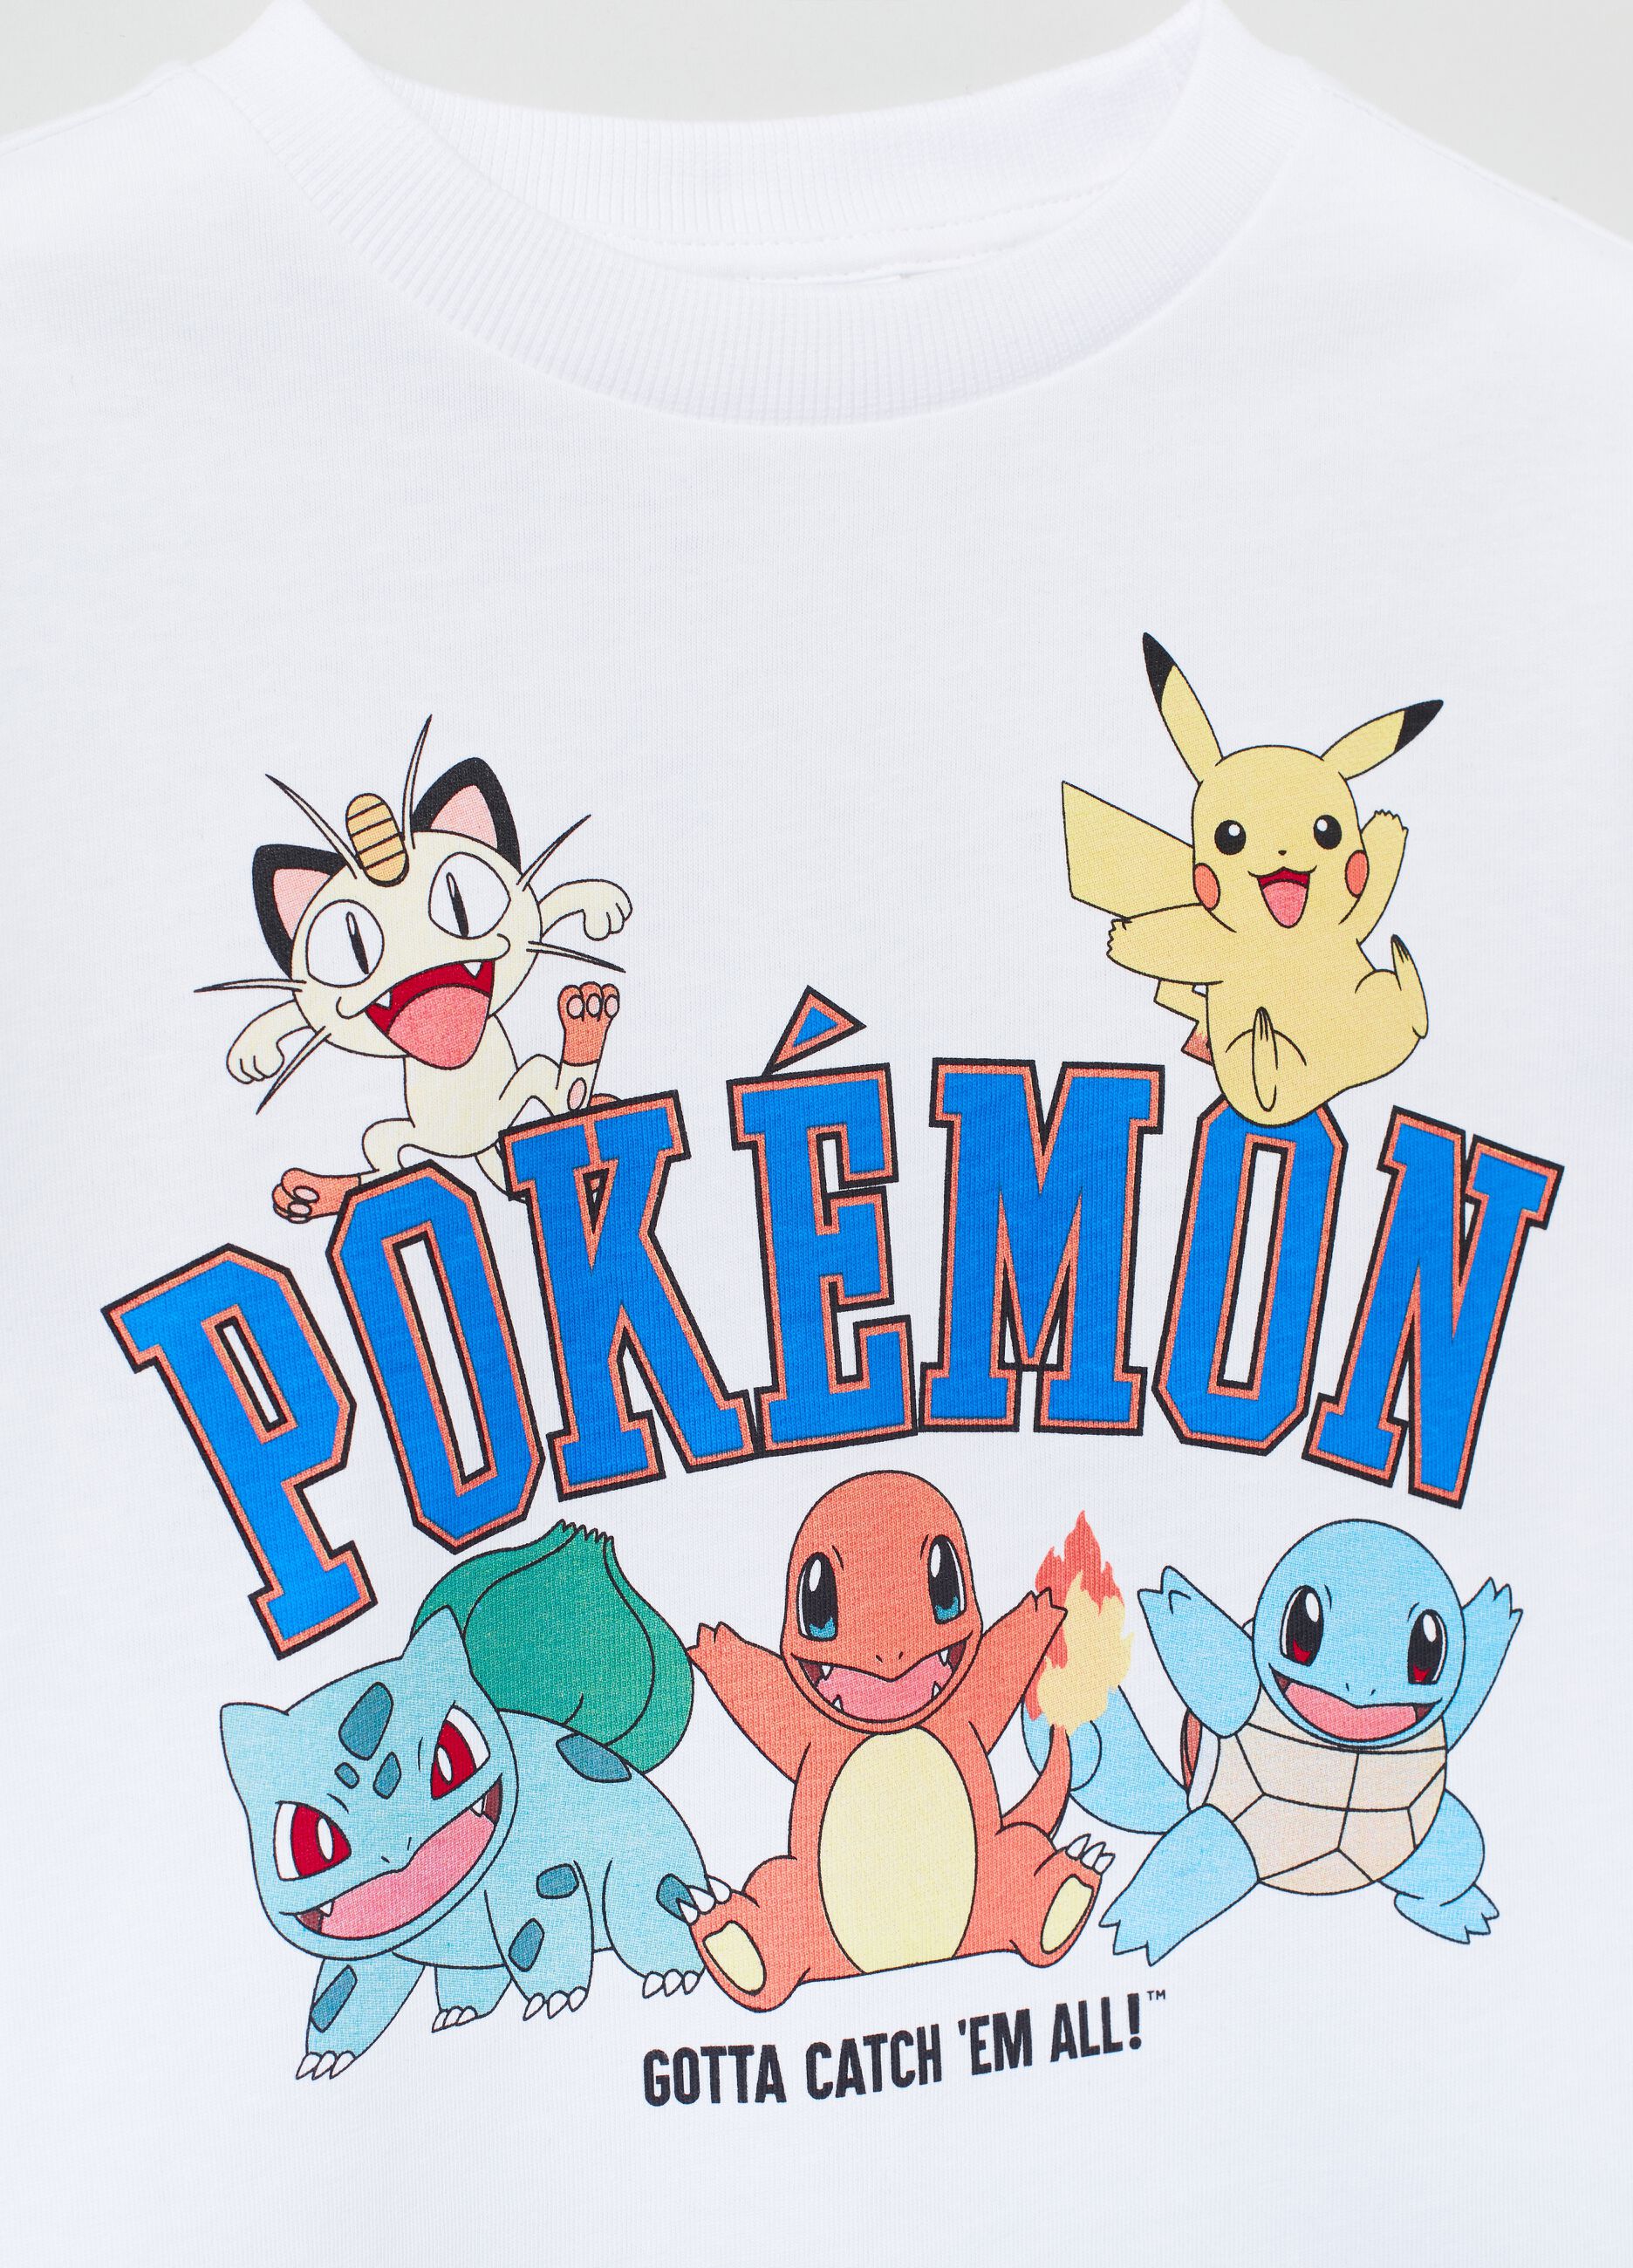 T-shirt con stampa Pokémon